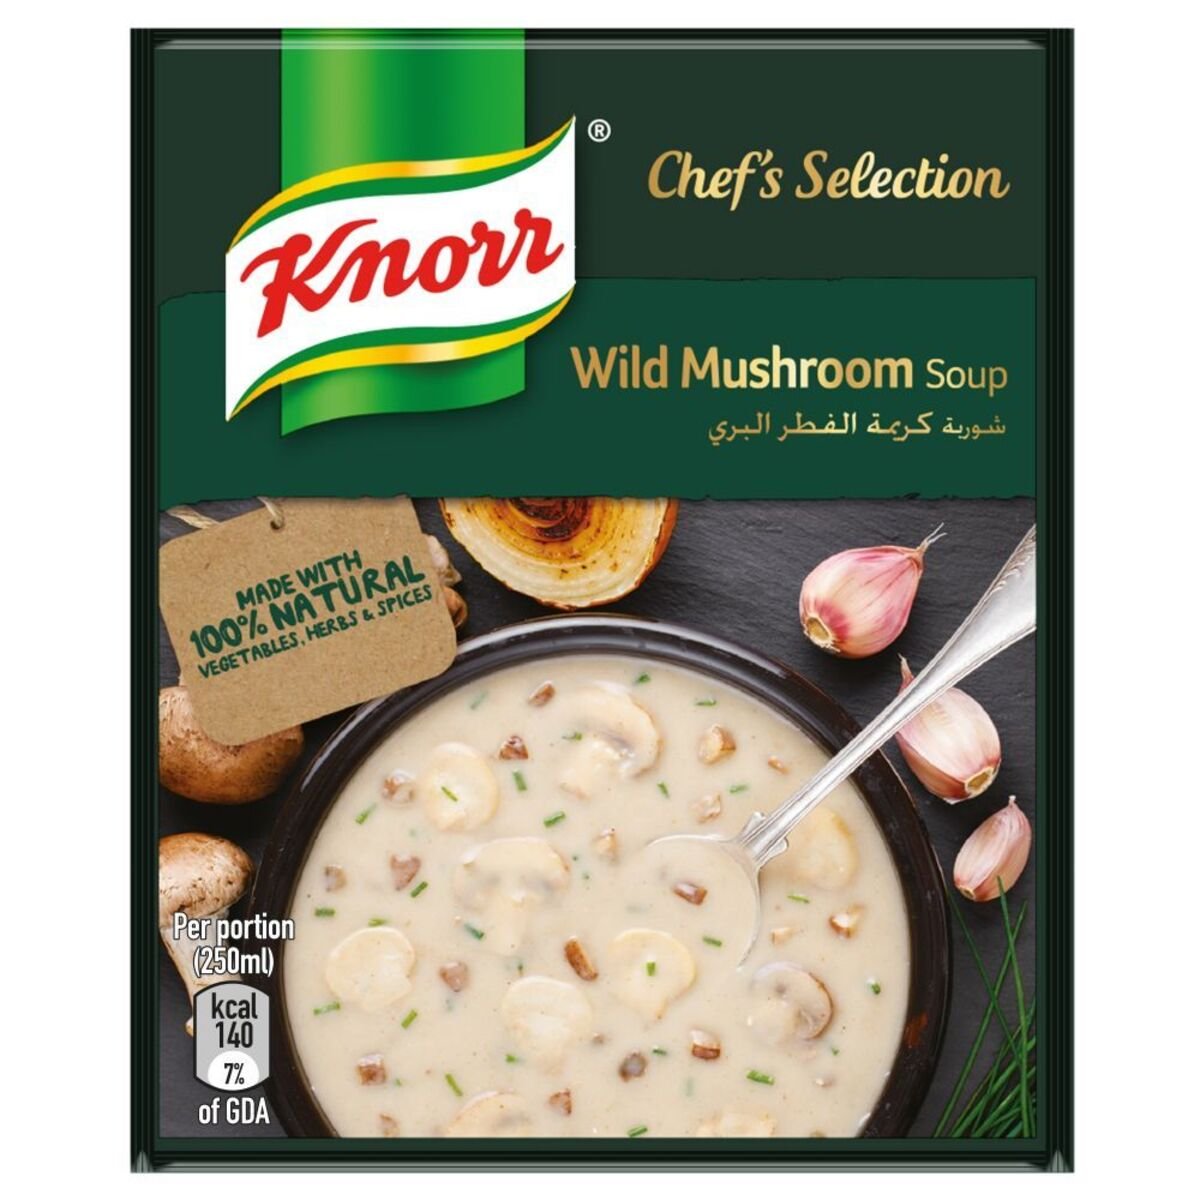 Knorr Soup Wild Mushroom 54 g